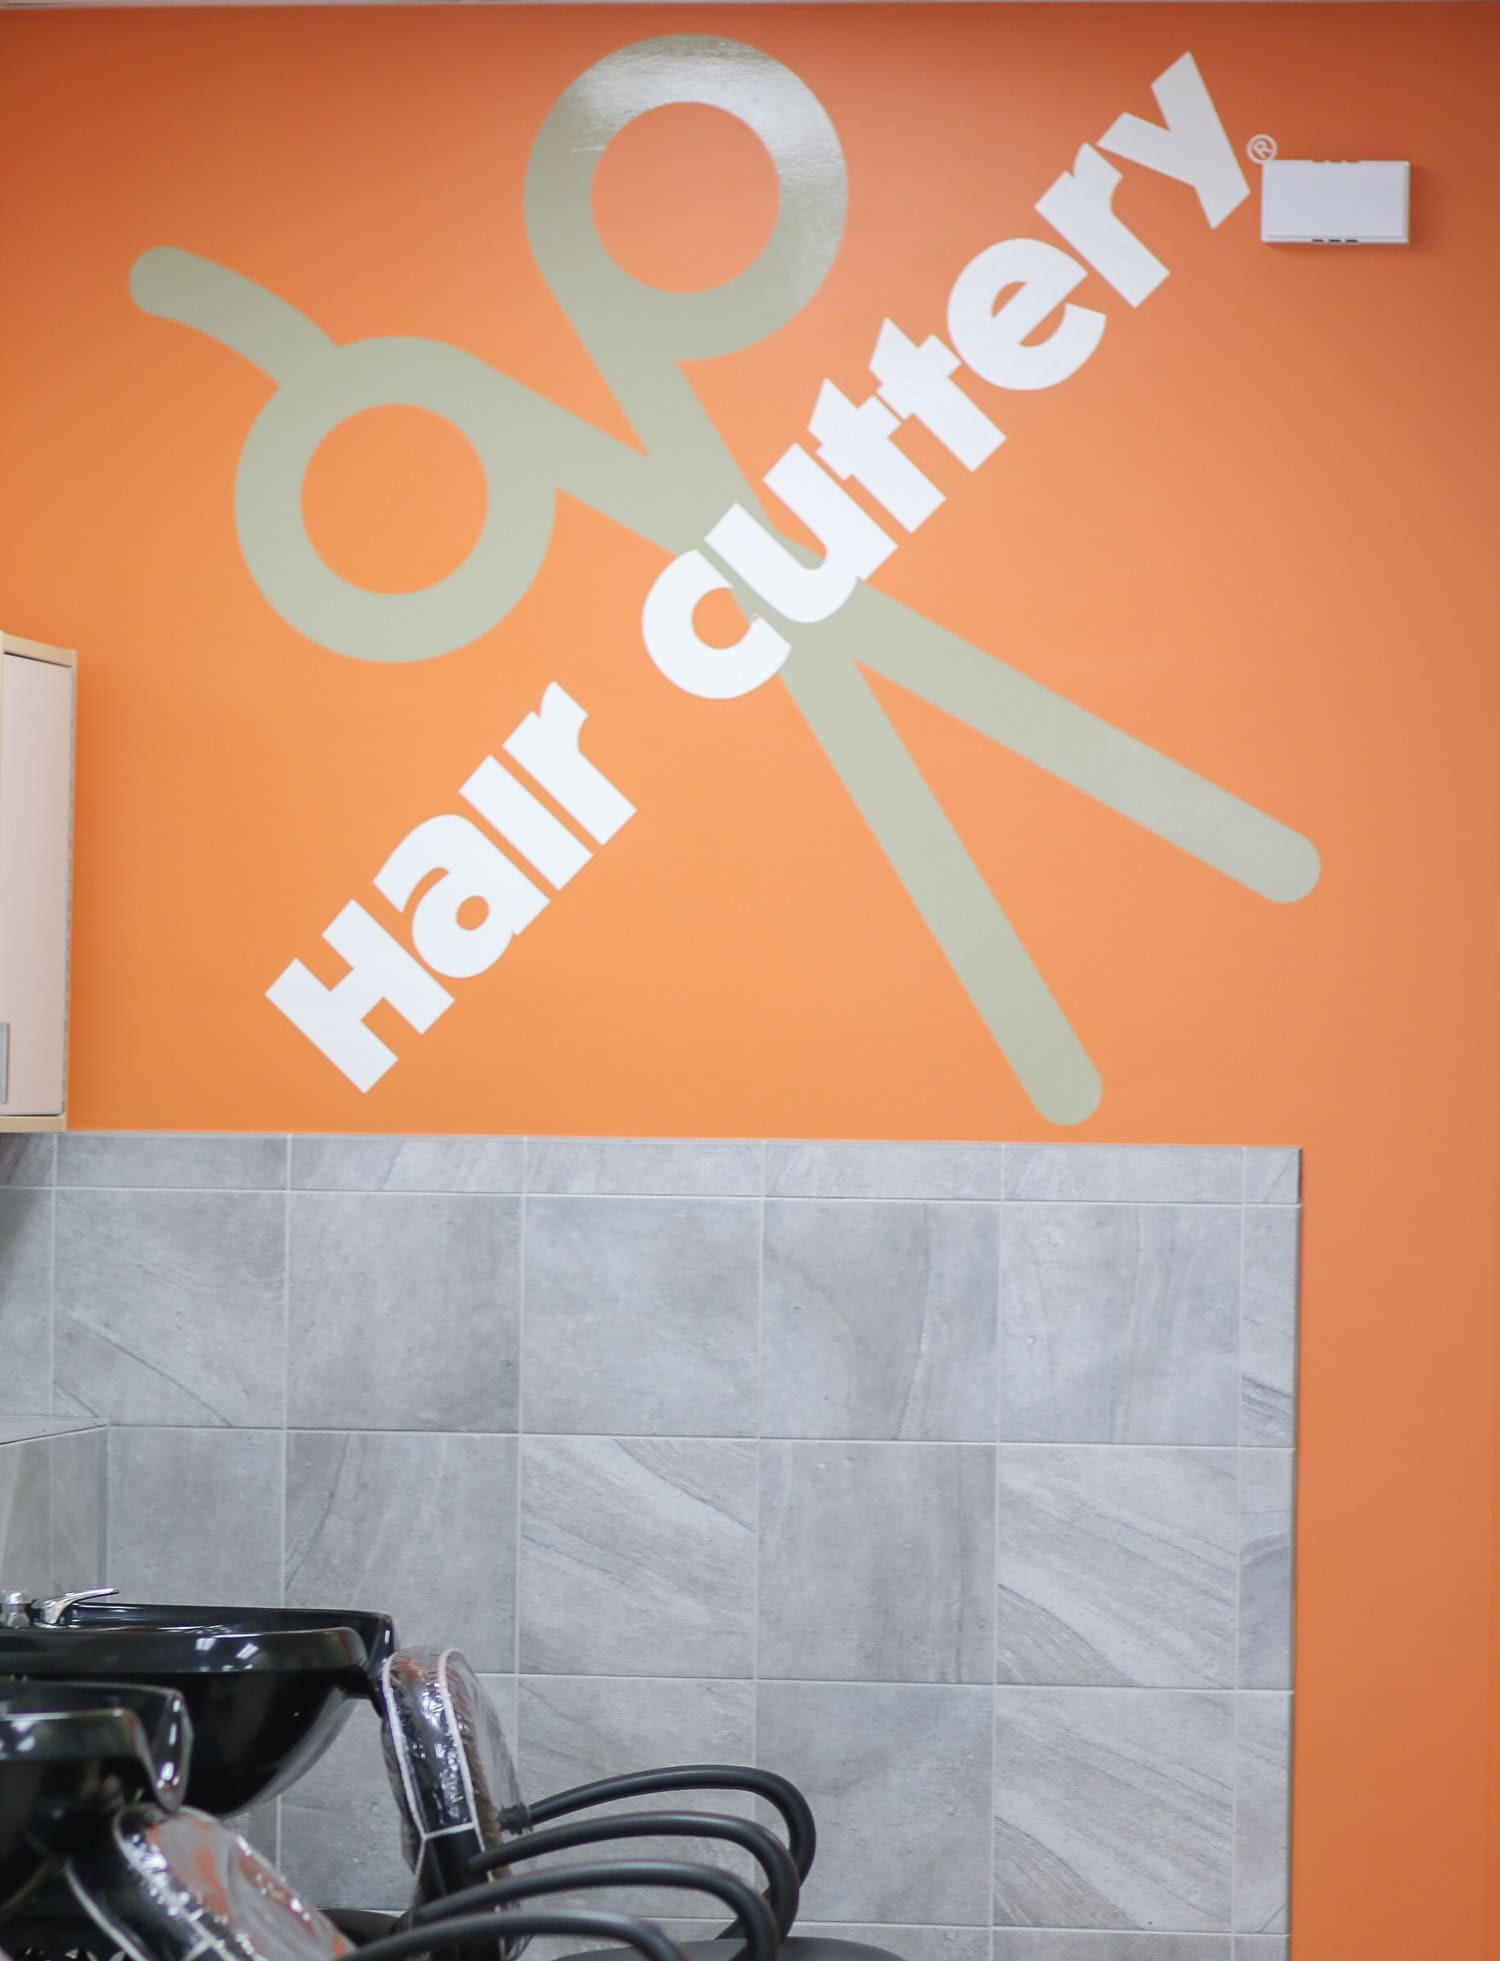 Hair Cuttery review